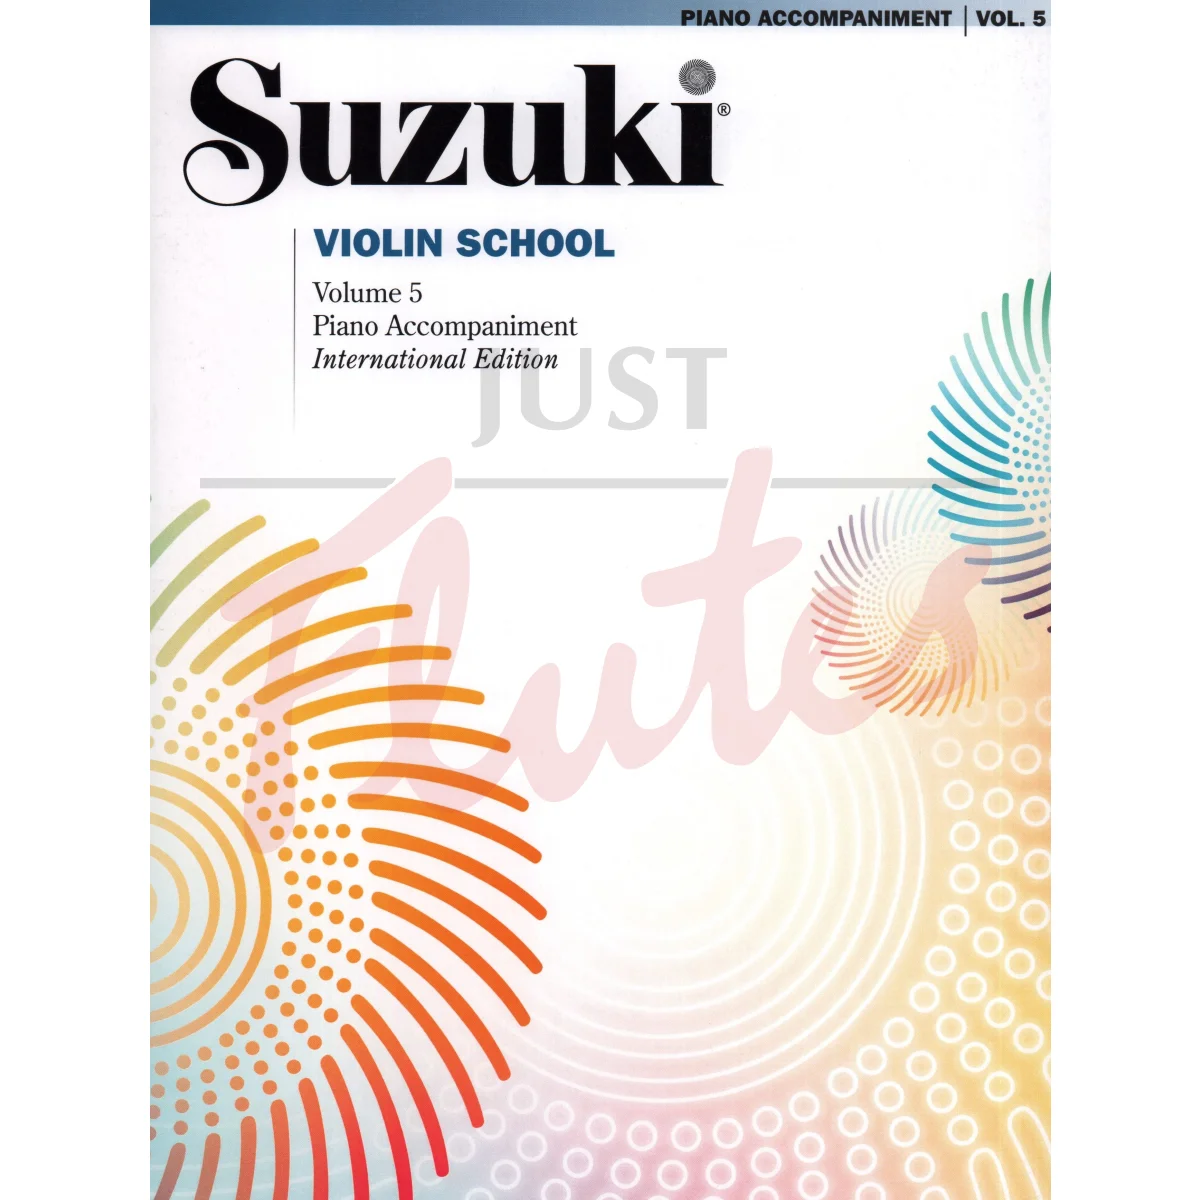 Suzuki Violin School Vol 5 (International Edition) [Piano Accompaniment]